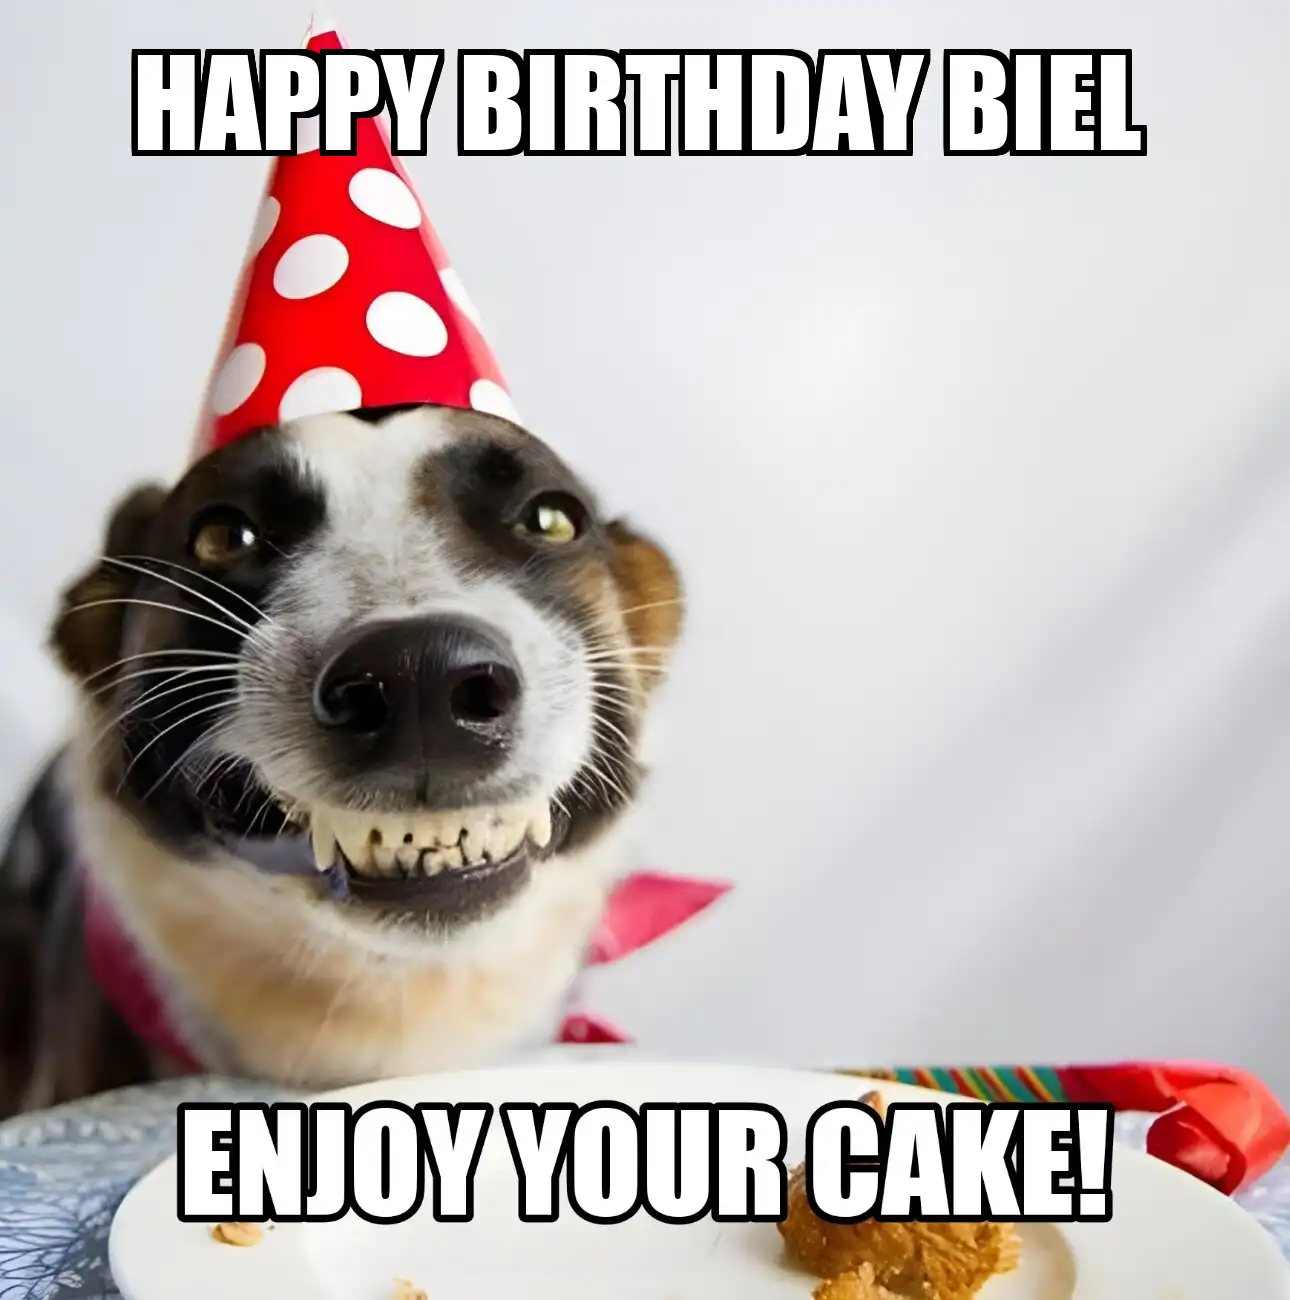 Happy Birthday Biel Enjoy Your Cake Dog Meme